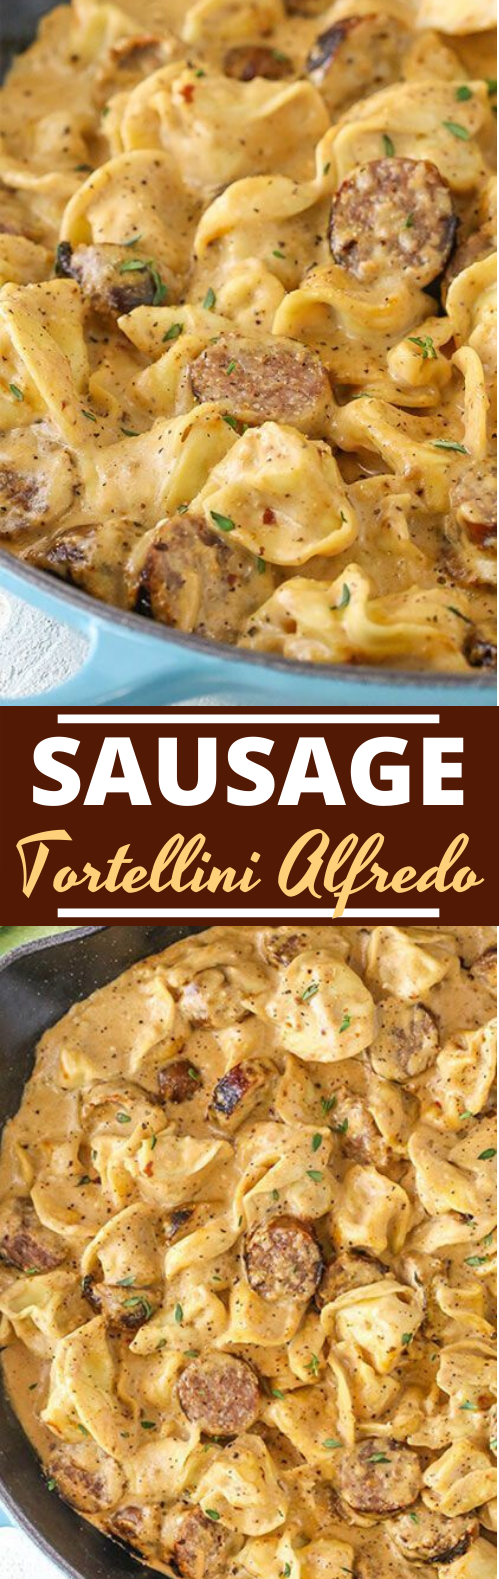 Sausage Tortellini Alfredo #dinner #pasta #weeknight #recipes #sausage